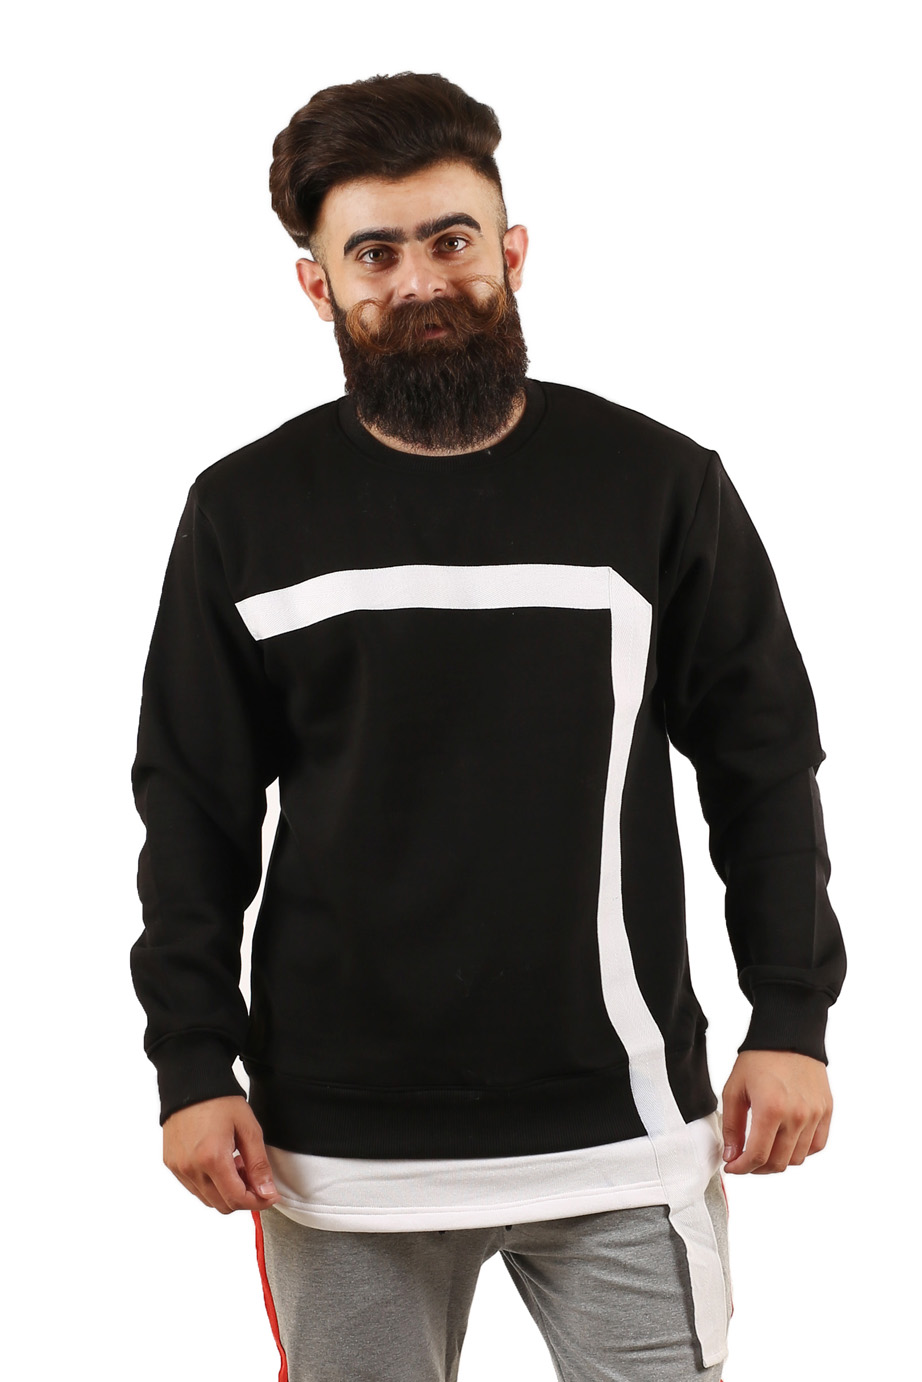 stylish sweatshirt for mens